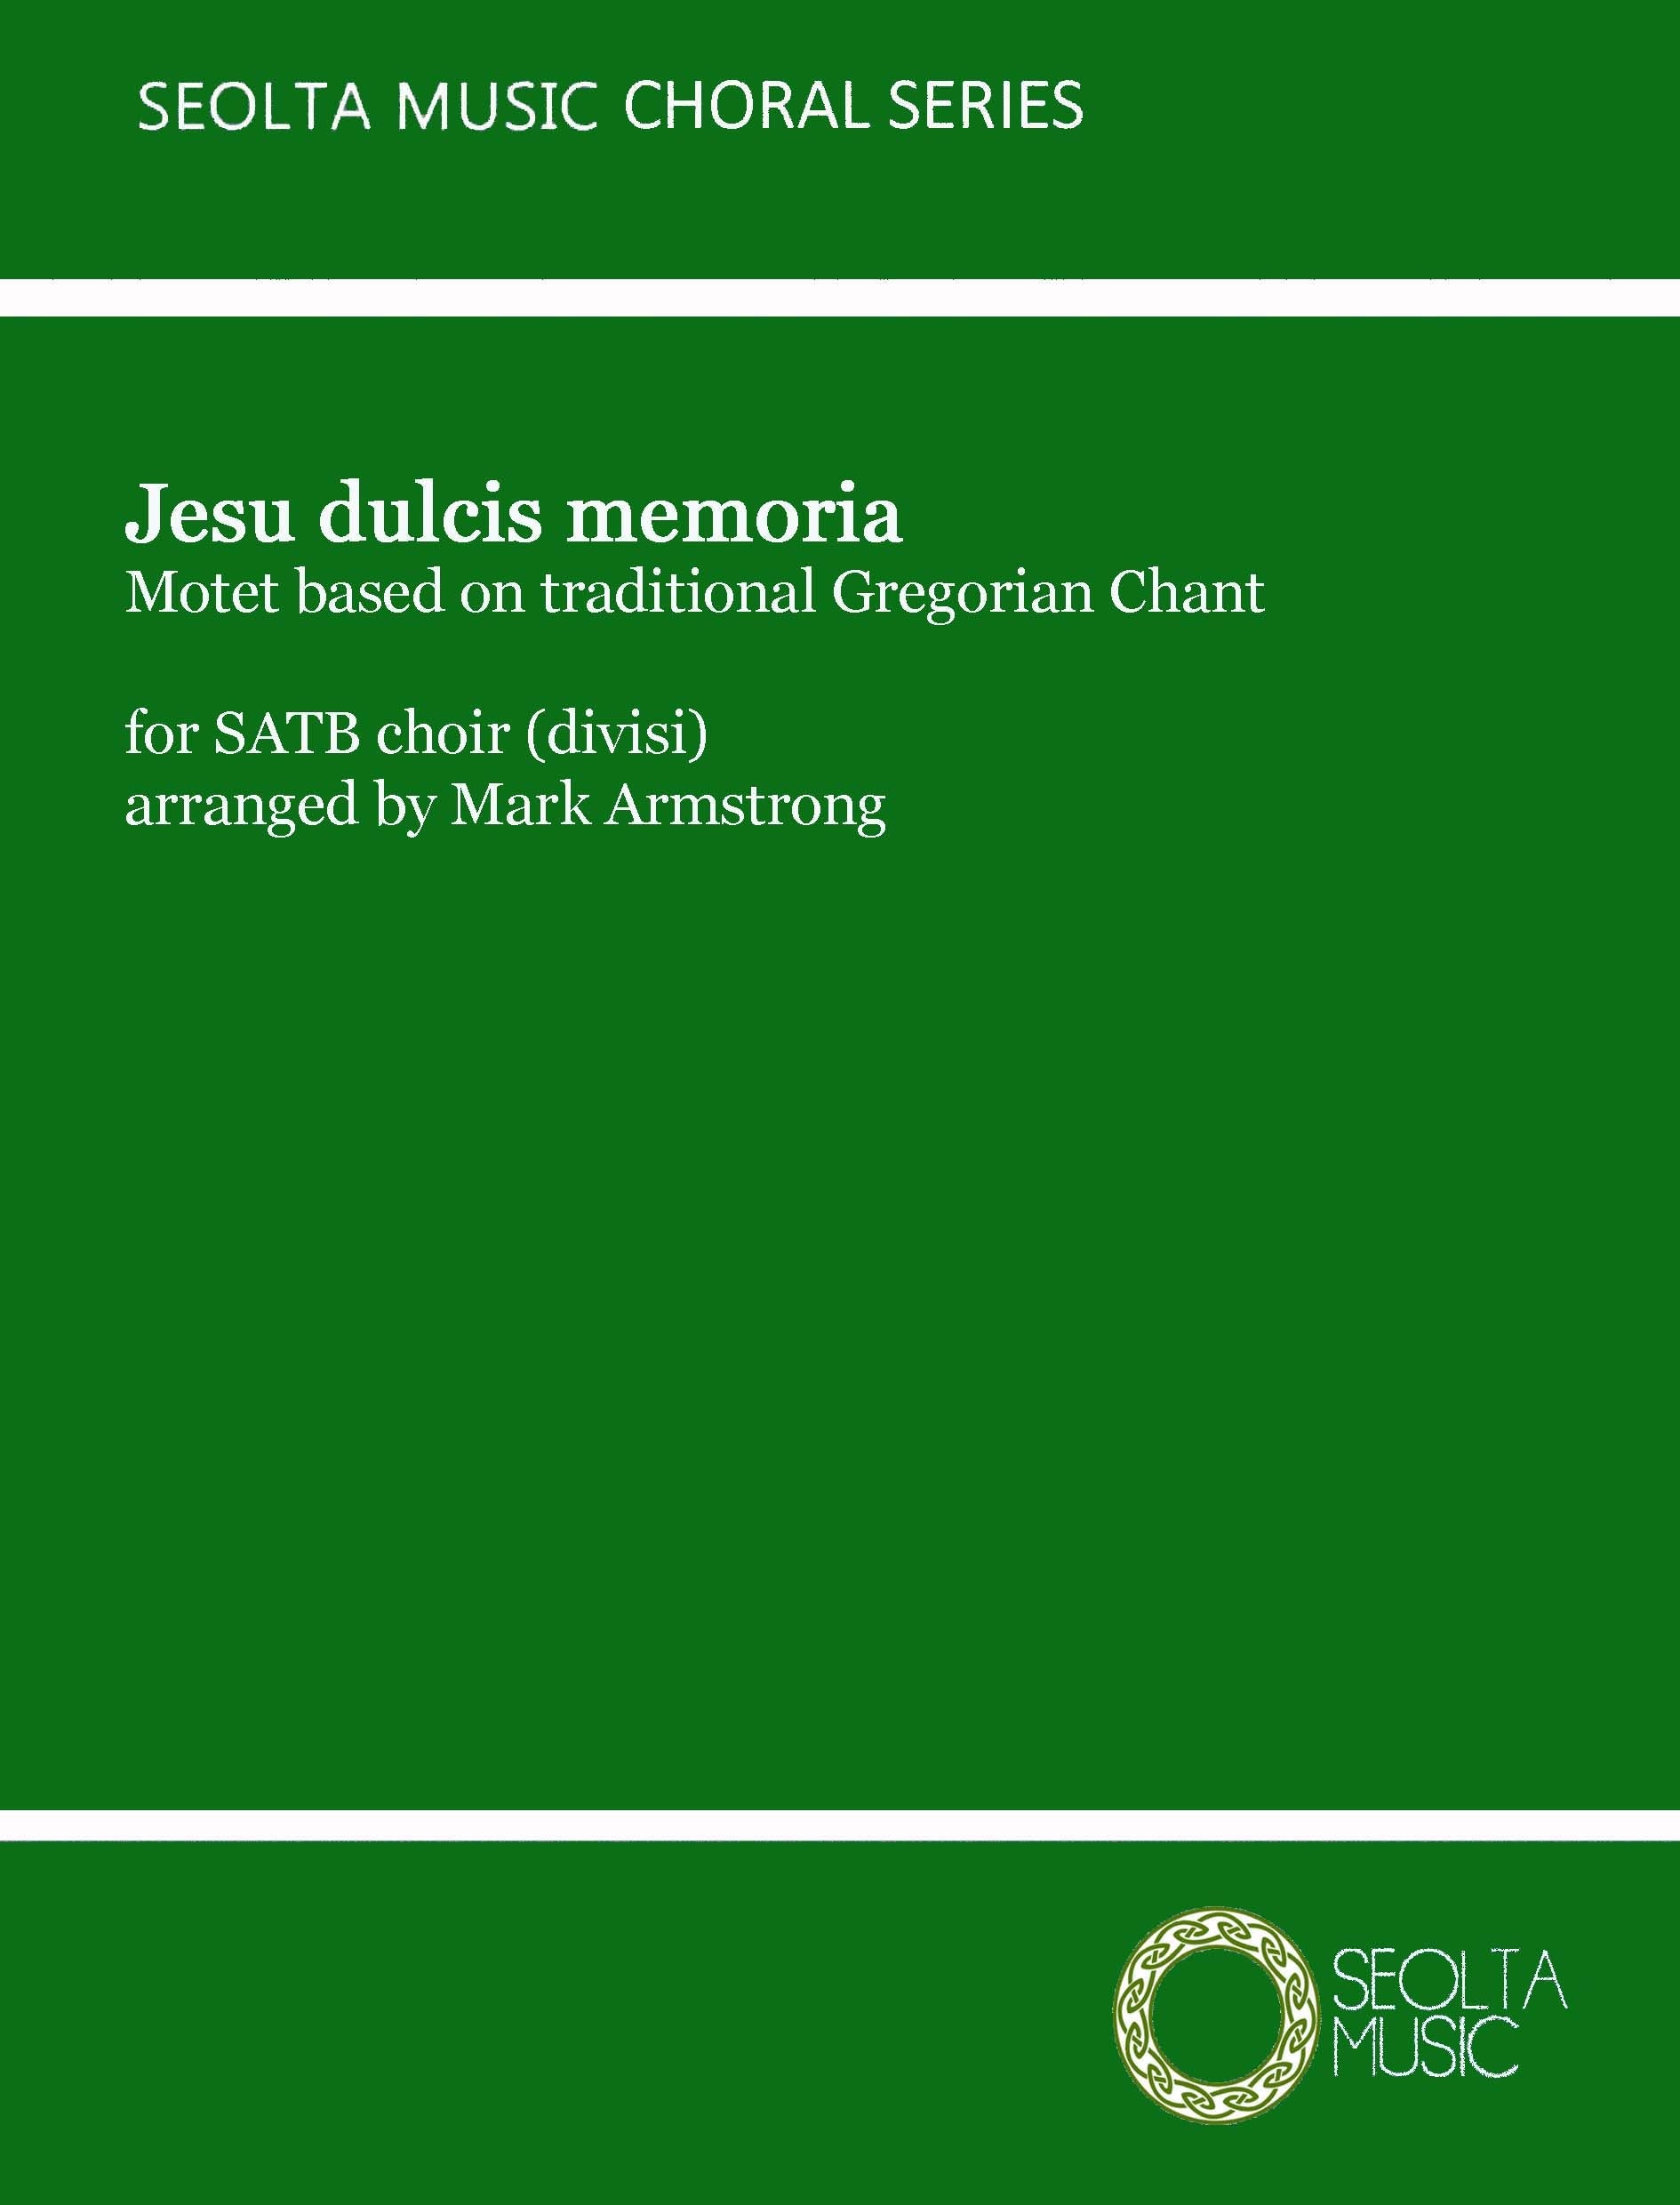 four-motets-on-gregorian-themes-jesu-dulcis-memoria-sheet-music